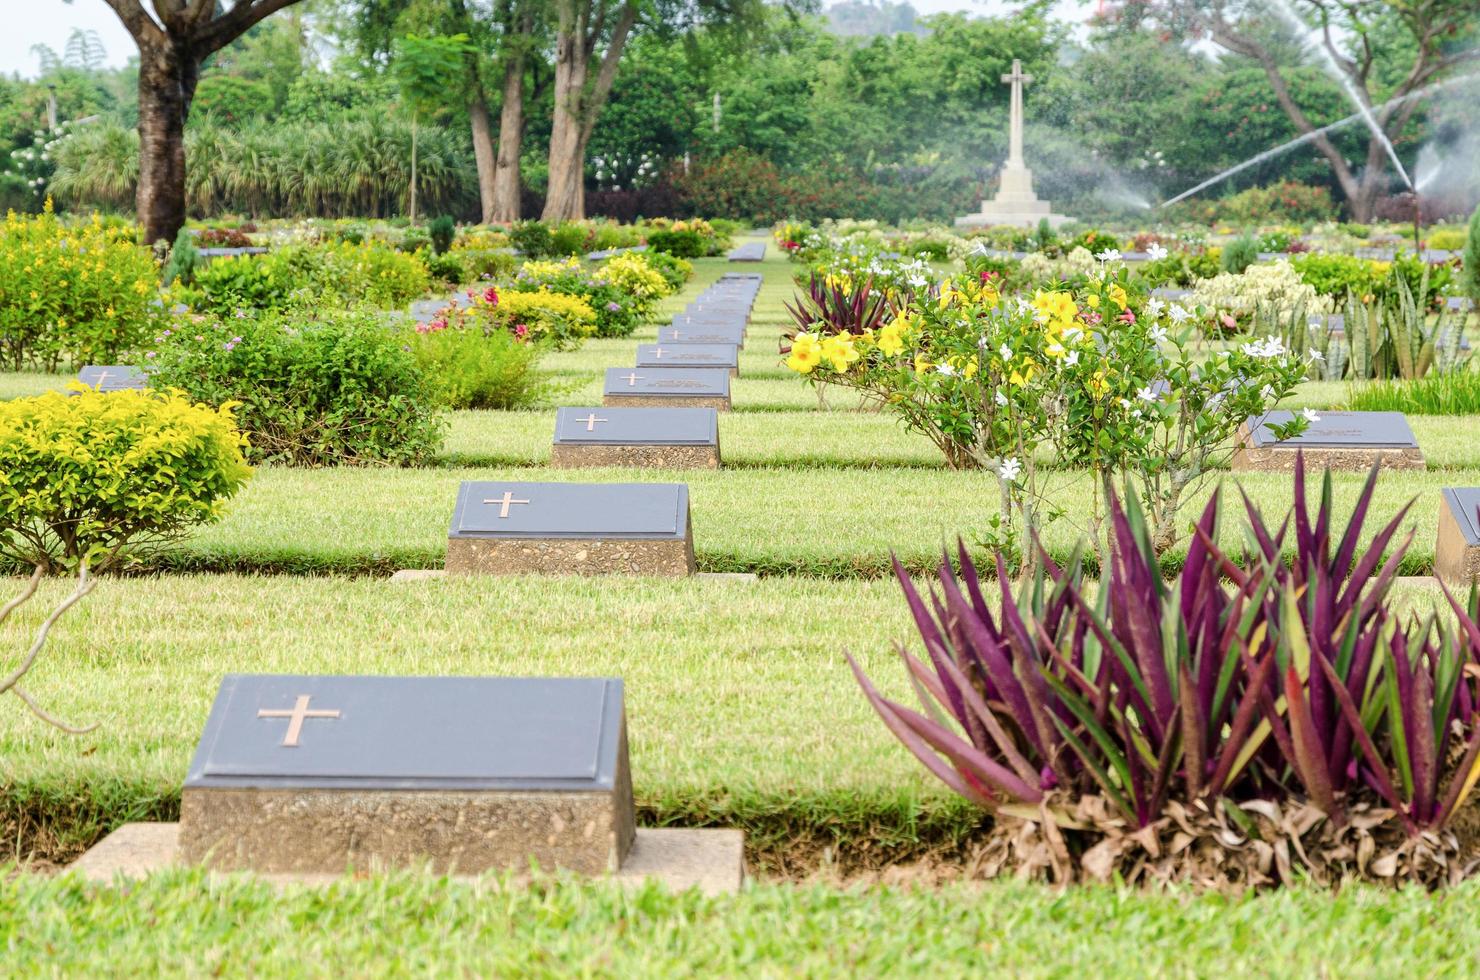 chungkai krig kyrkogård, thailand foto